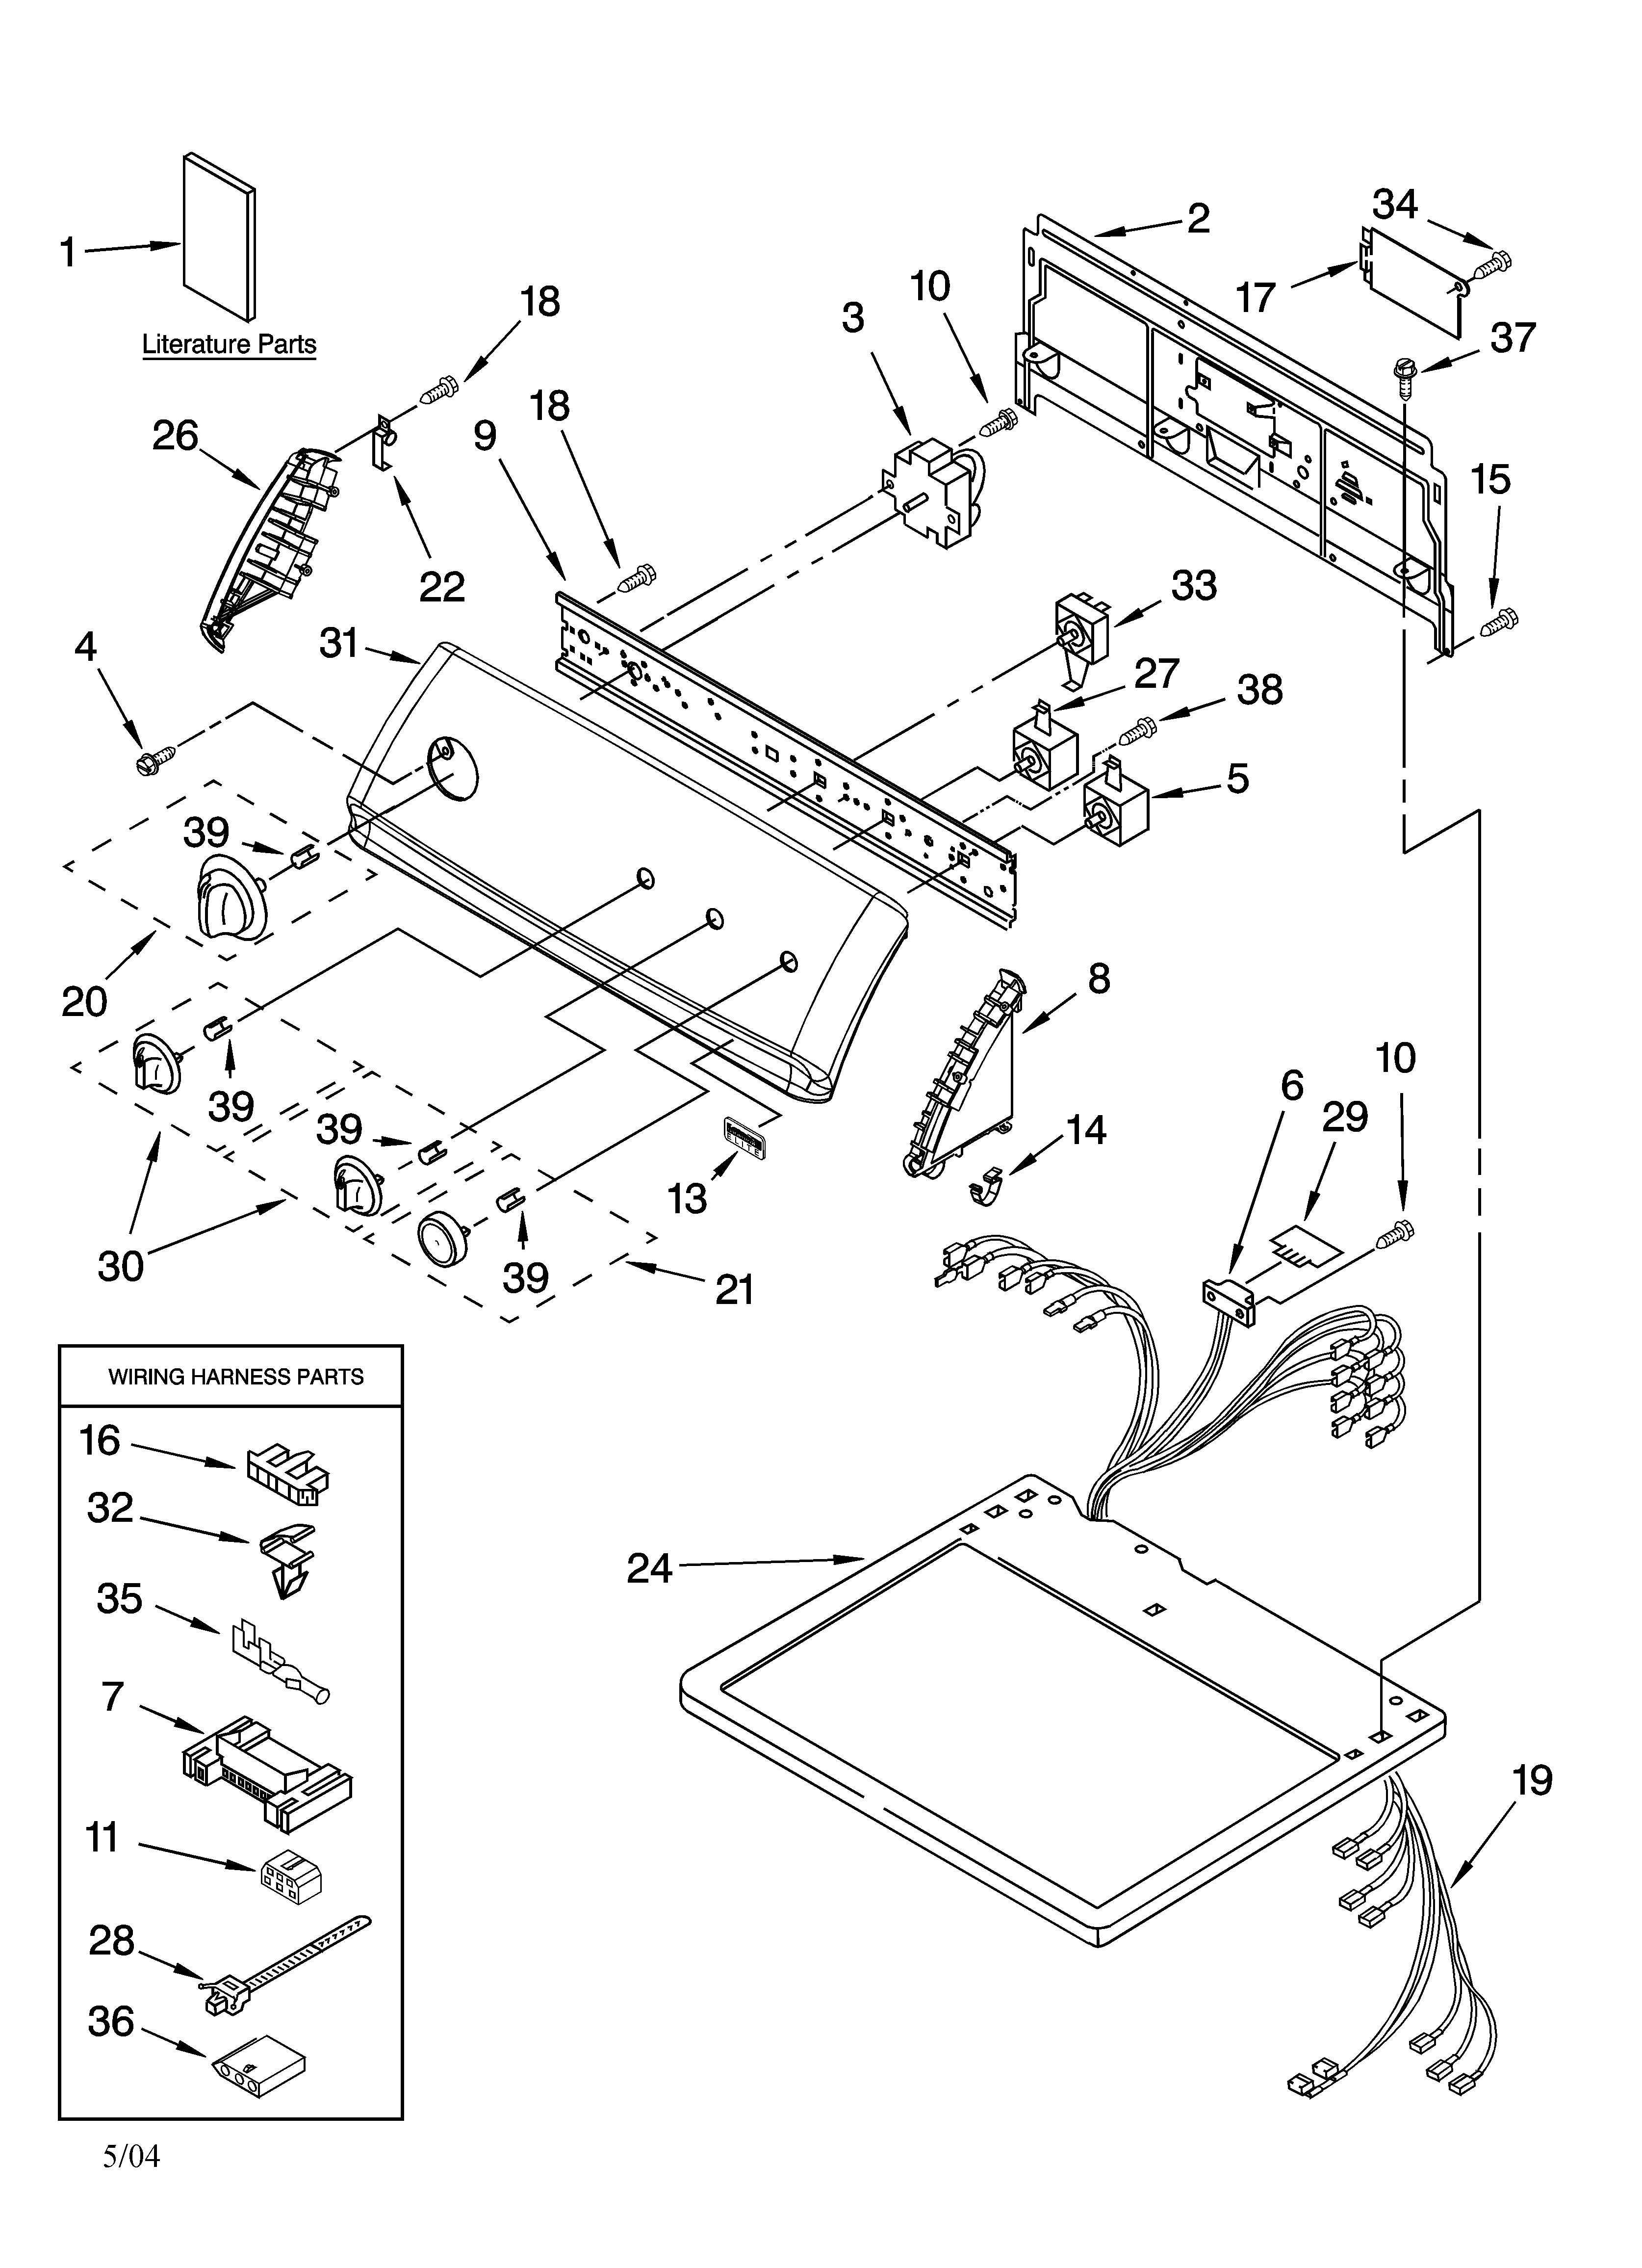 Kenmore 700 Series Dryer Parts Diagram 2944